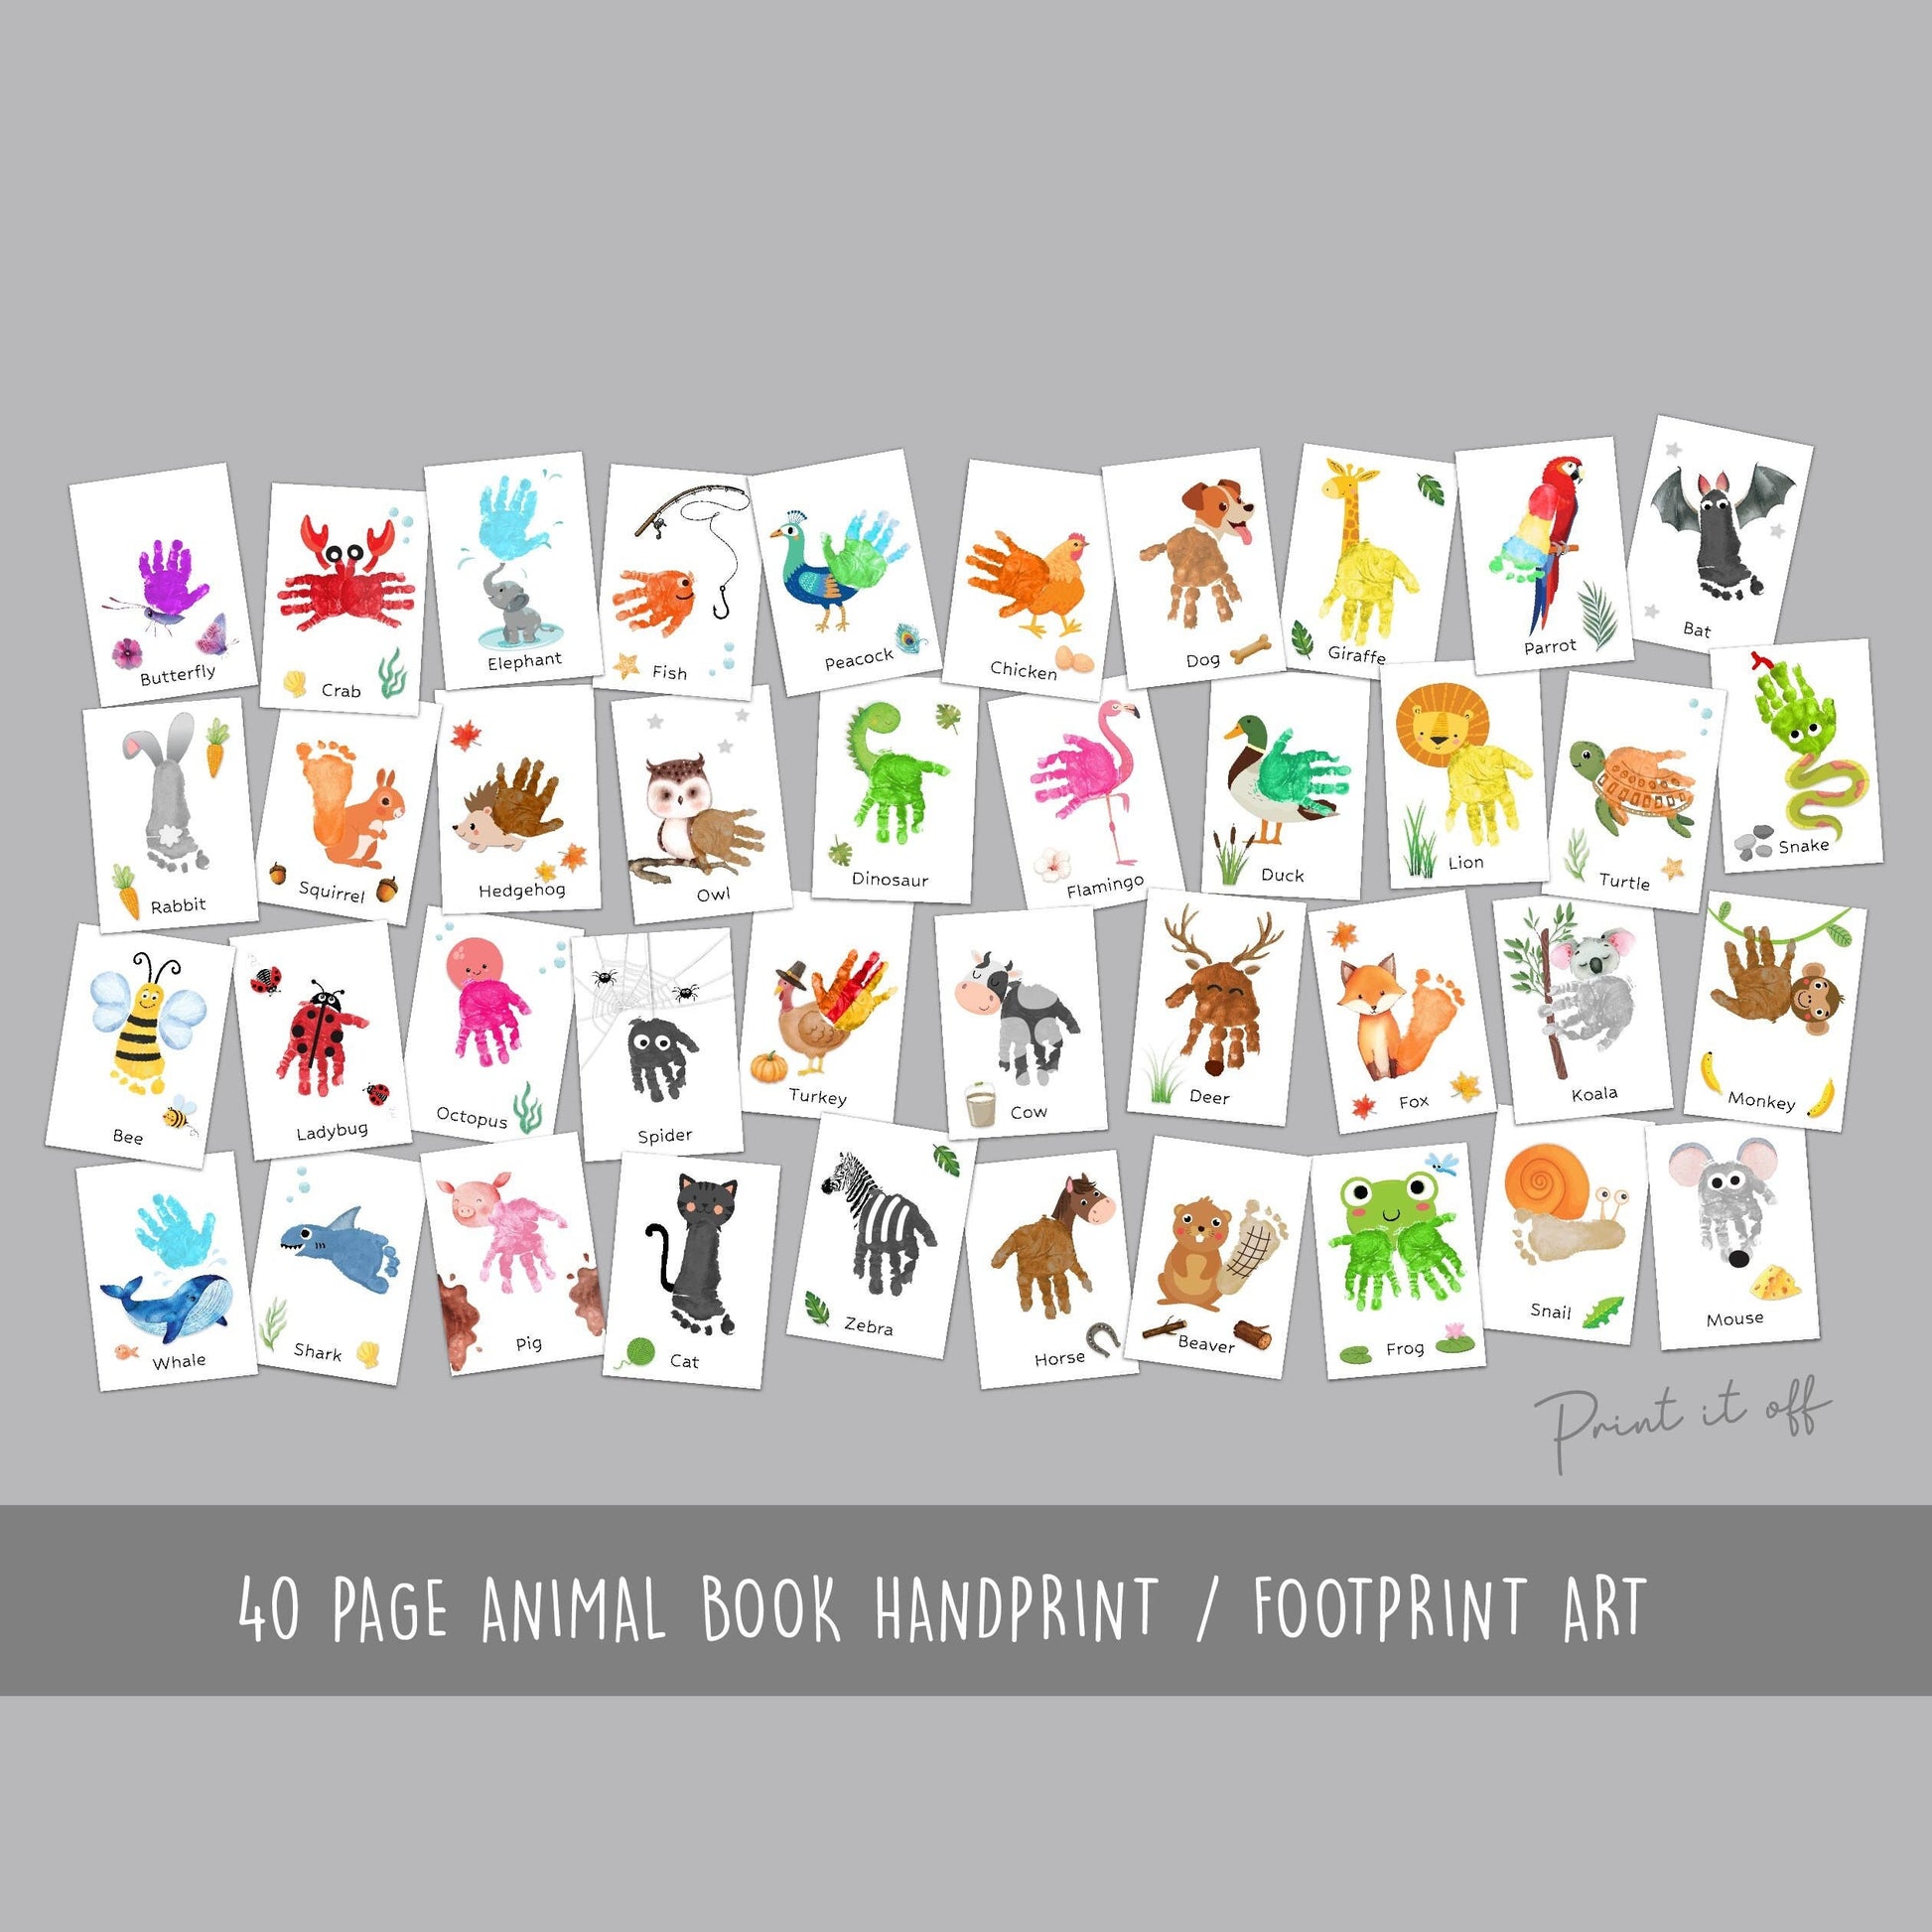 Animal Book Handprint Footprint Craft Art / Baby Toddler Child / Teacher Classroom Nursery Wall Decor Activity Card / Print It Off 0779